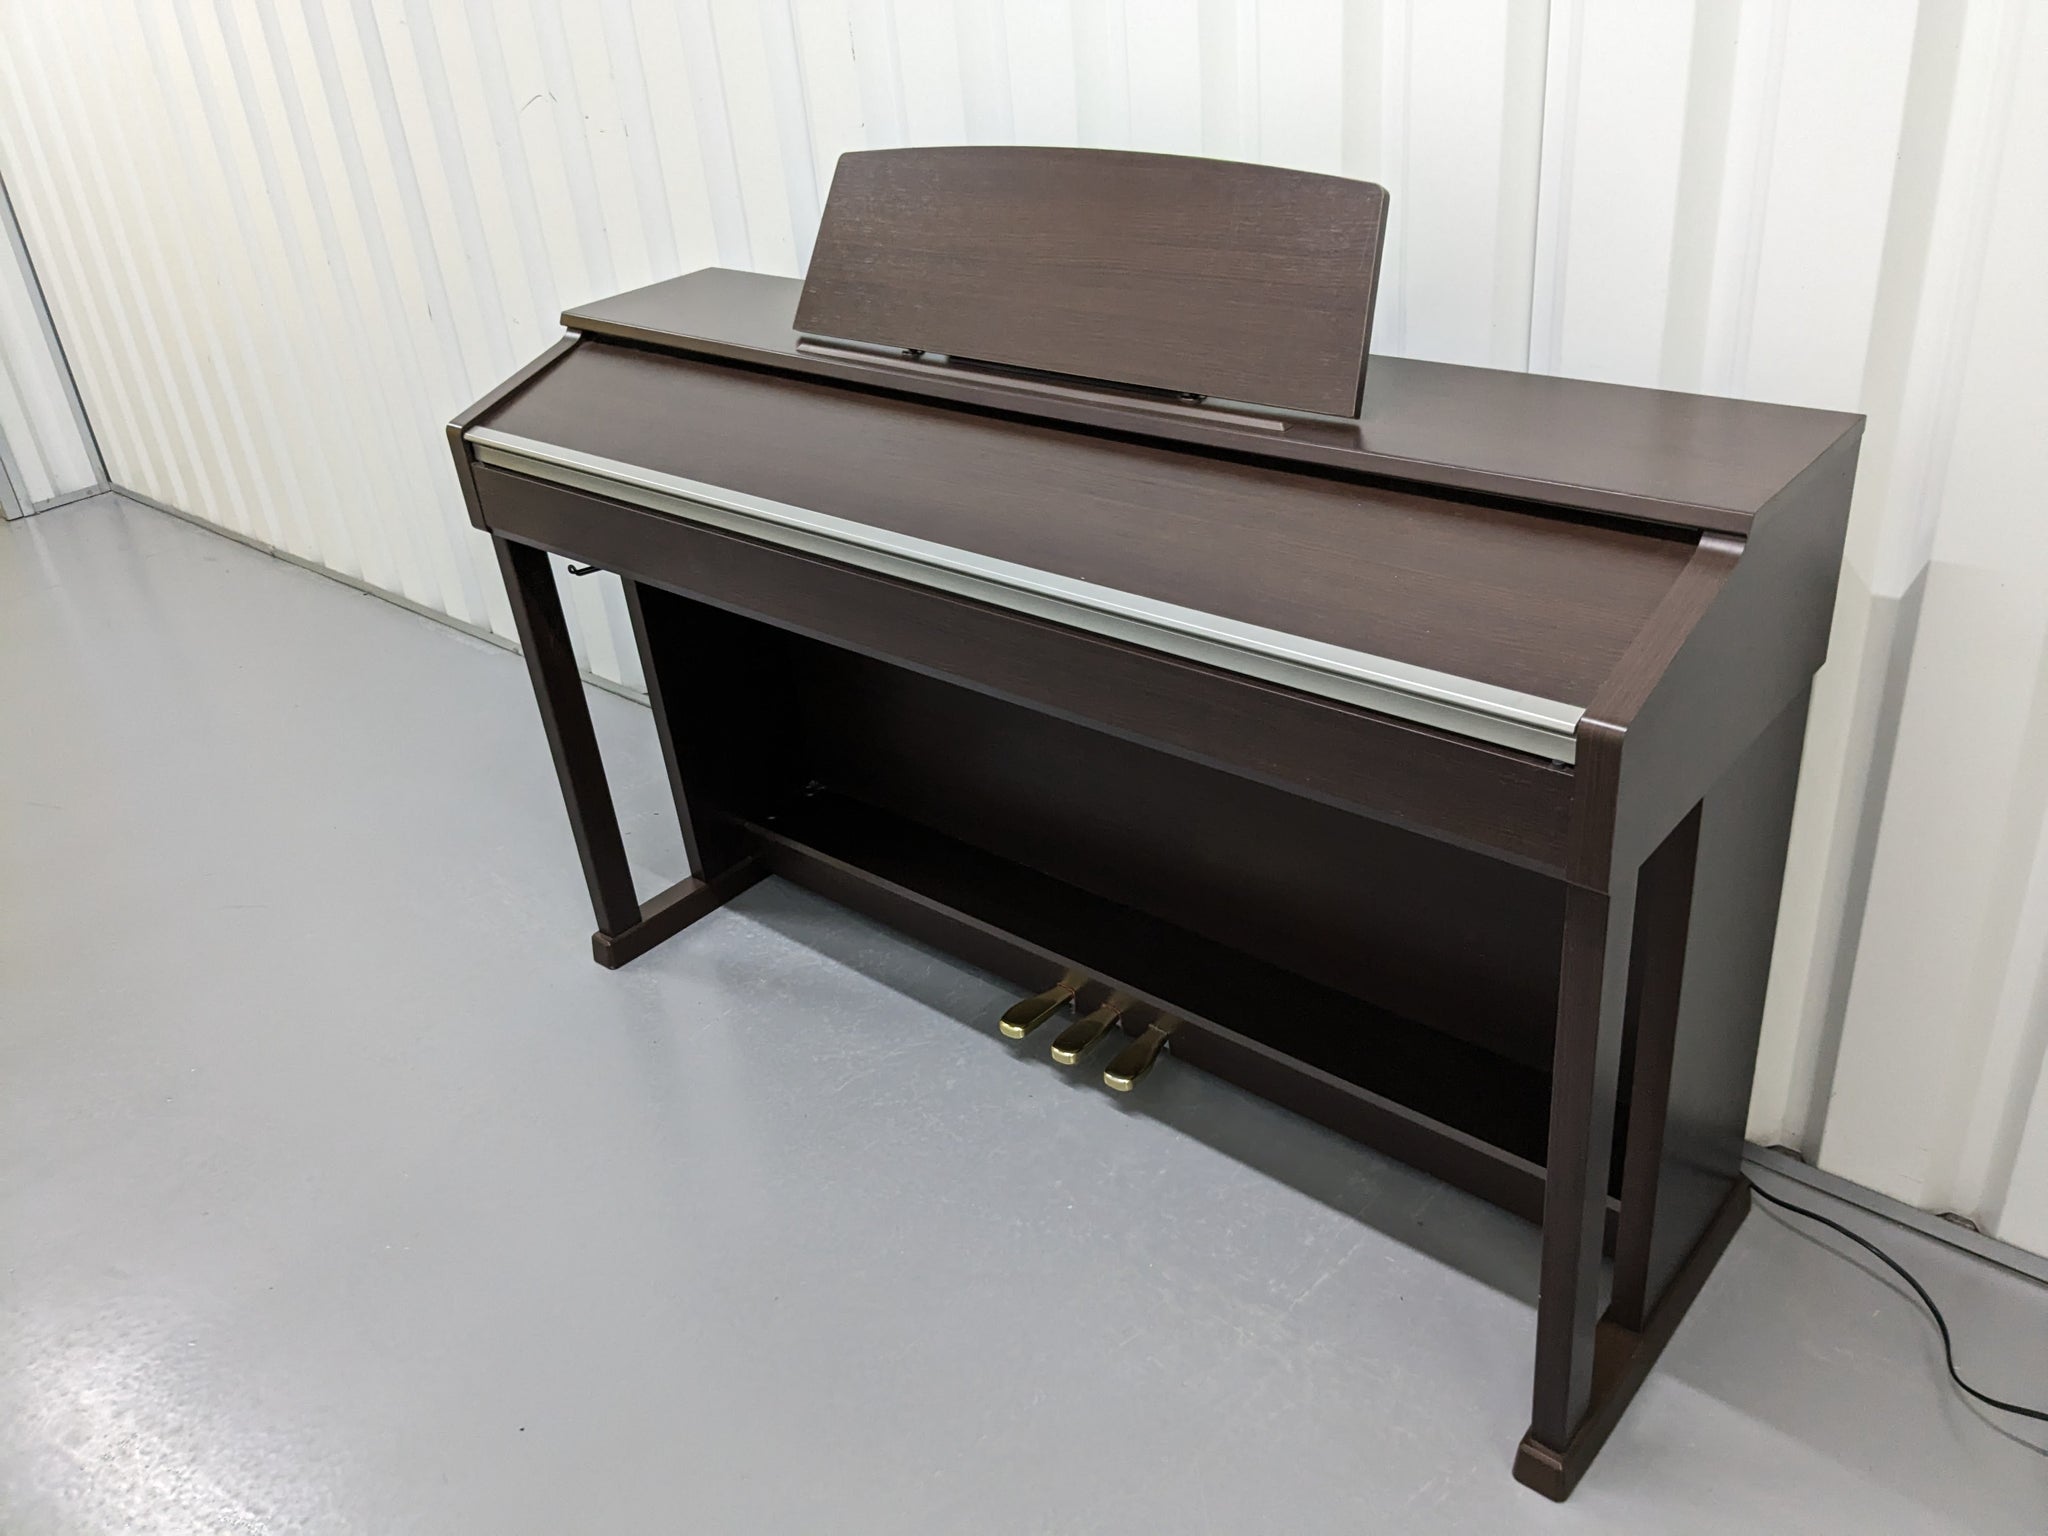 CASIO CELVIANO AP-420 DIGITAL PIANO IN DARK ROSEWOOD stock #23338 